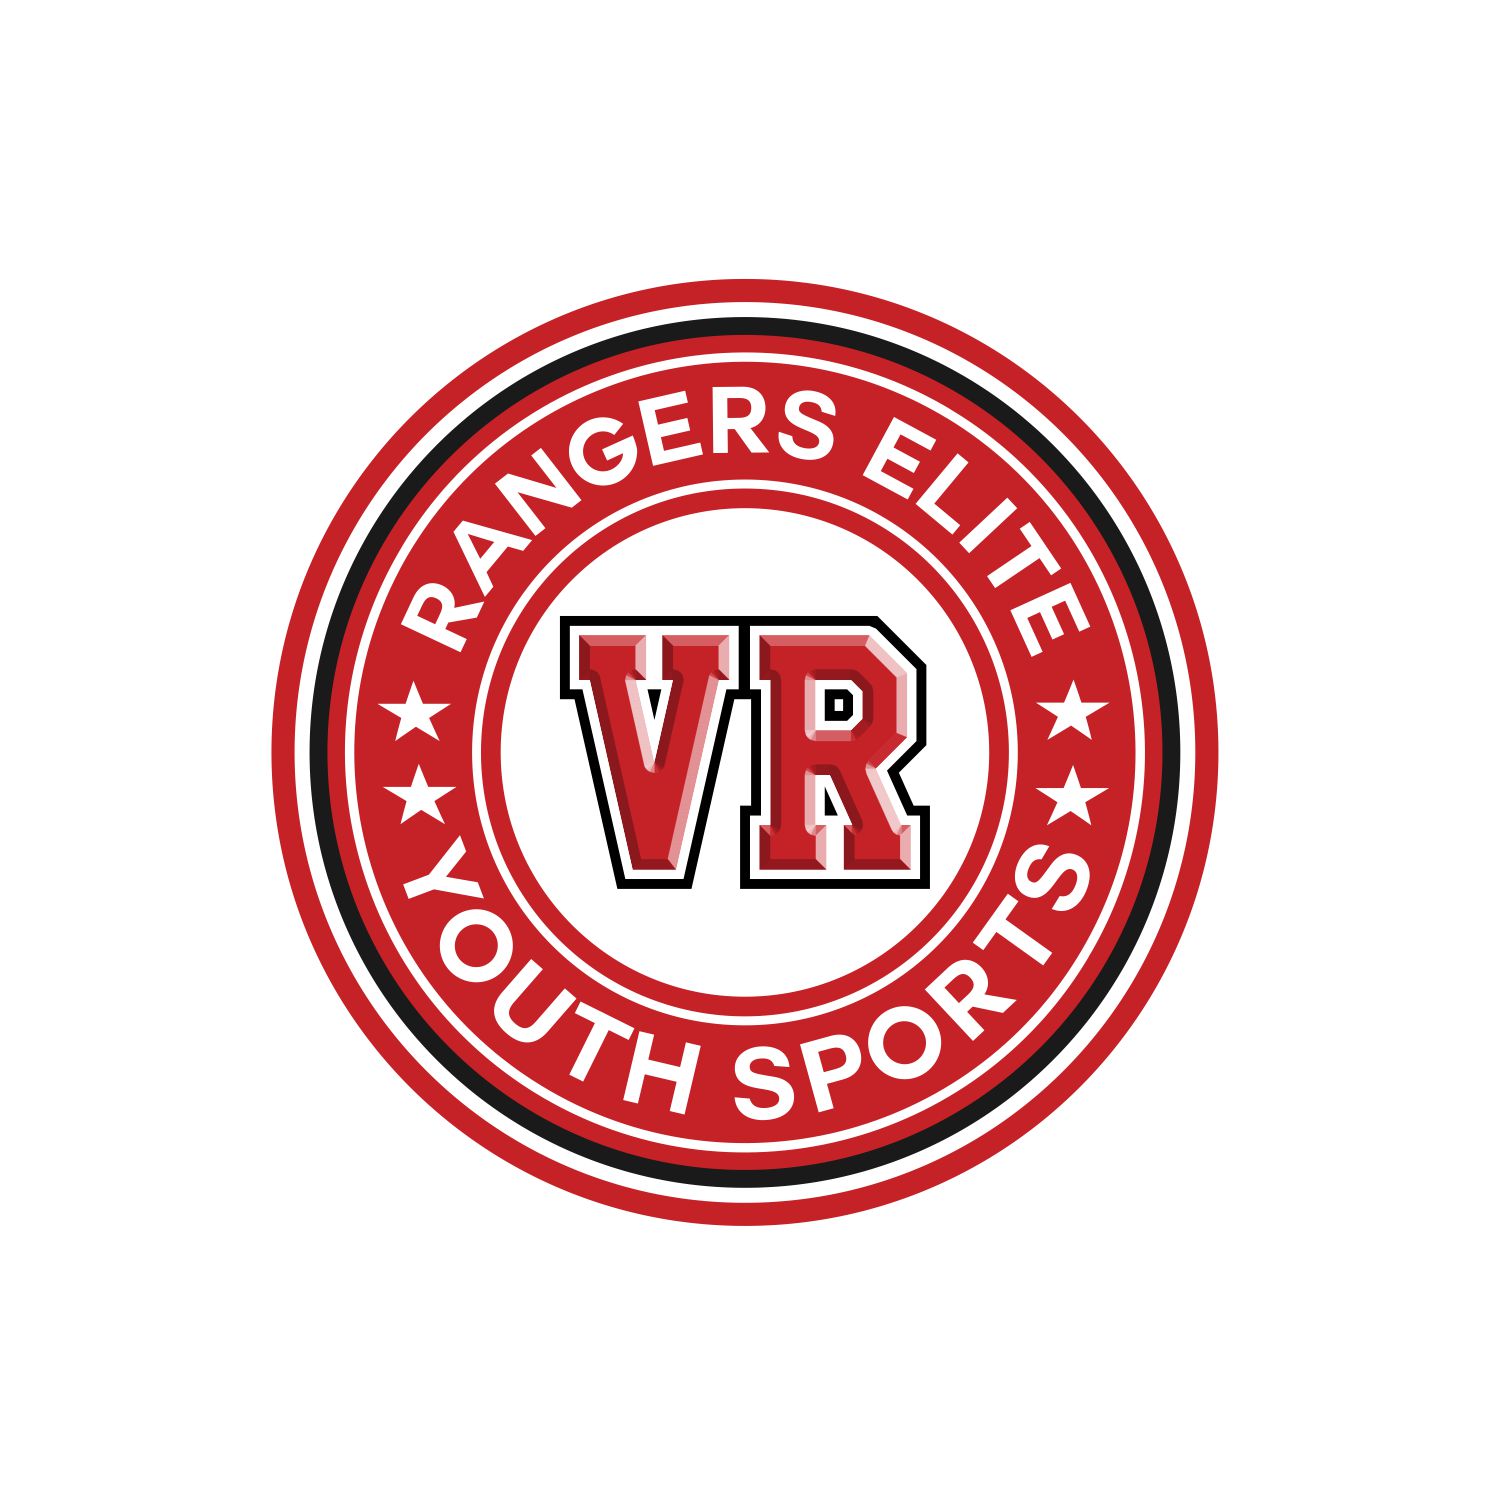 Vista Ridge High School Rangers Apparel Store